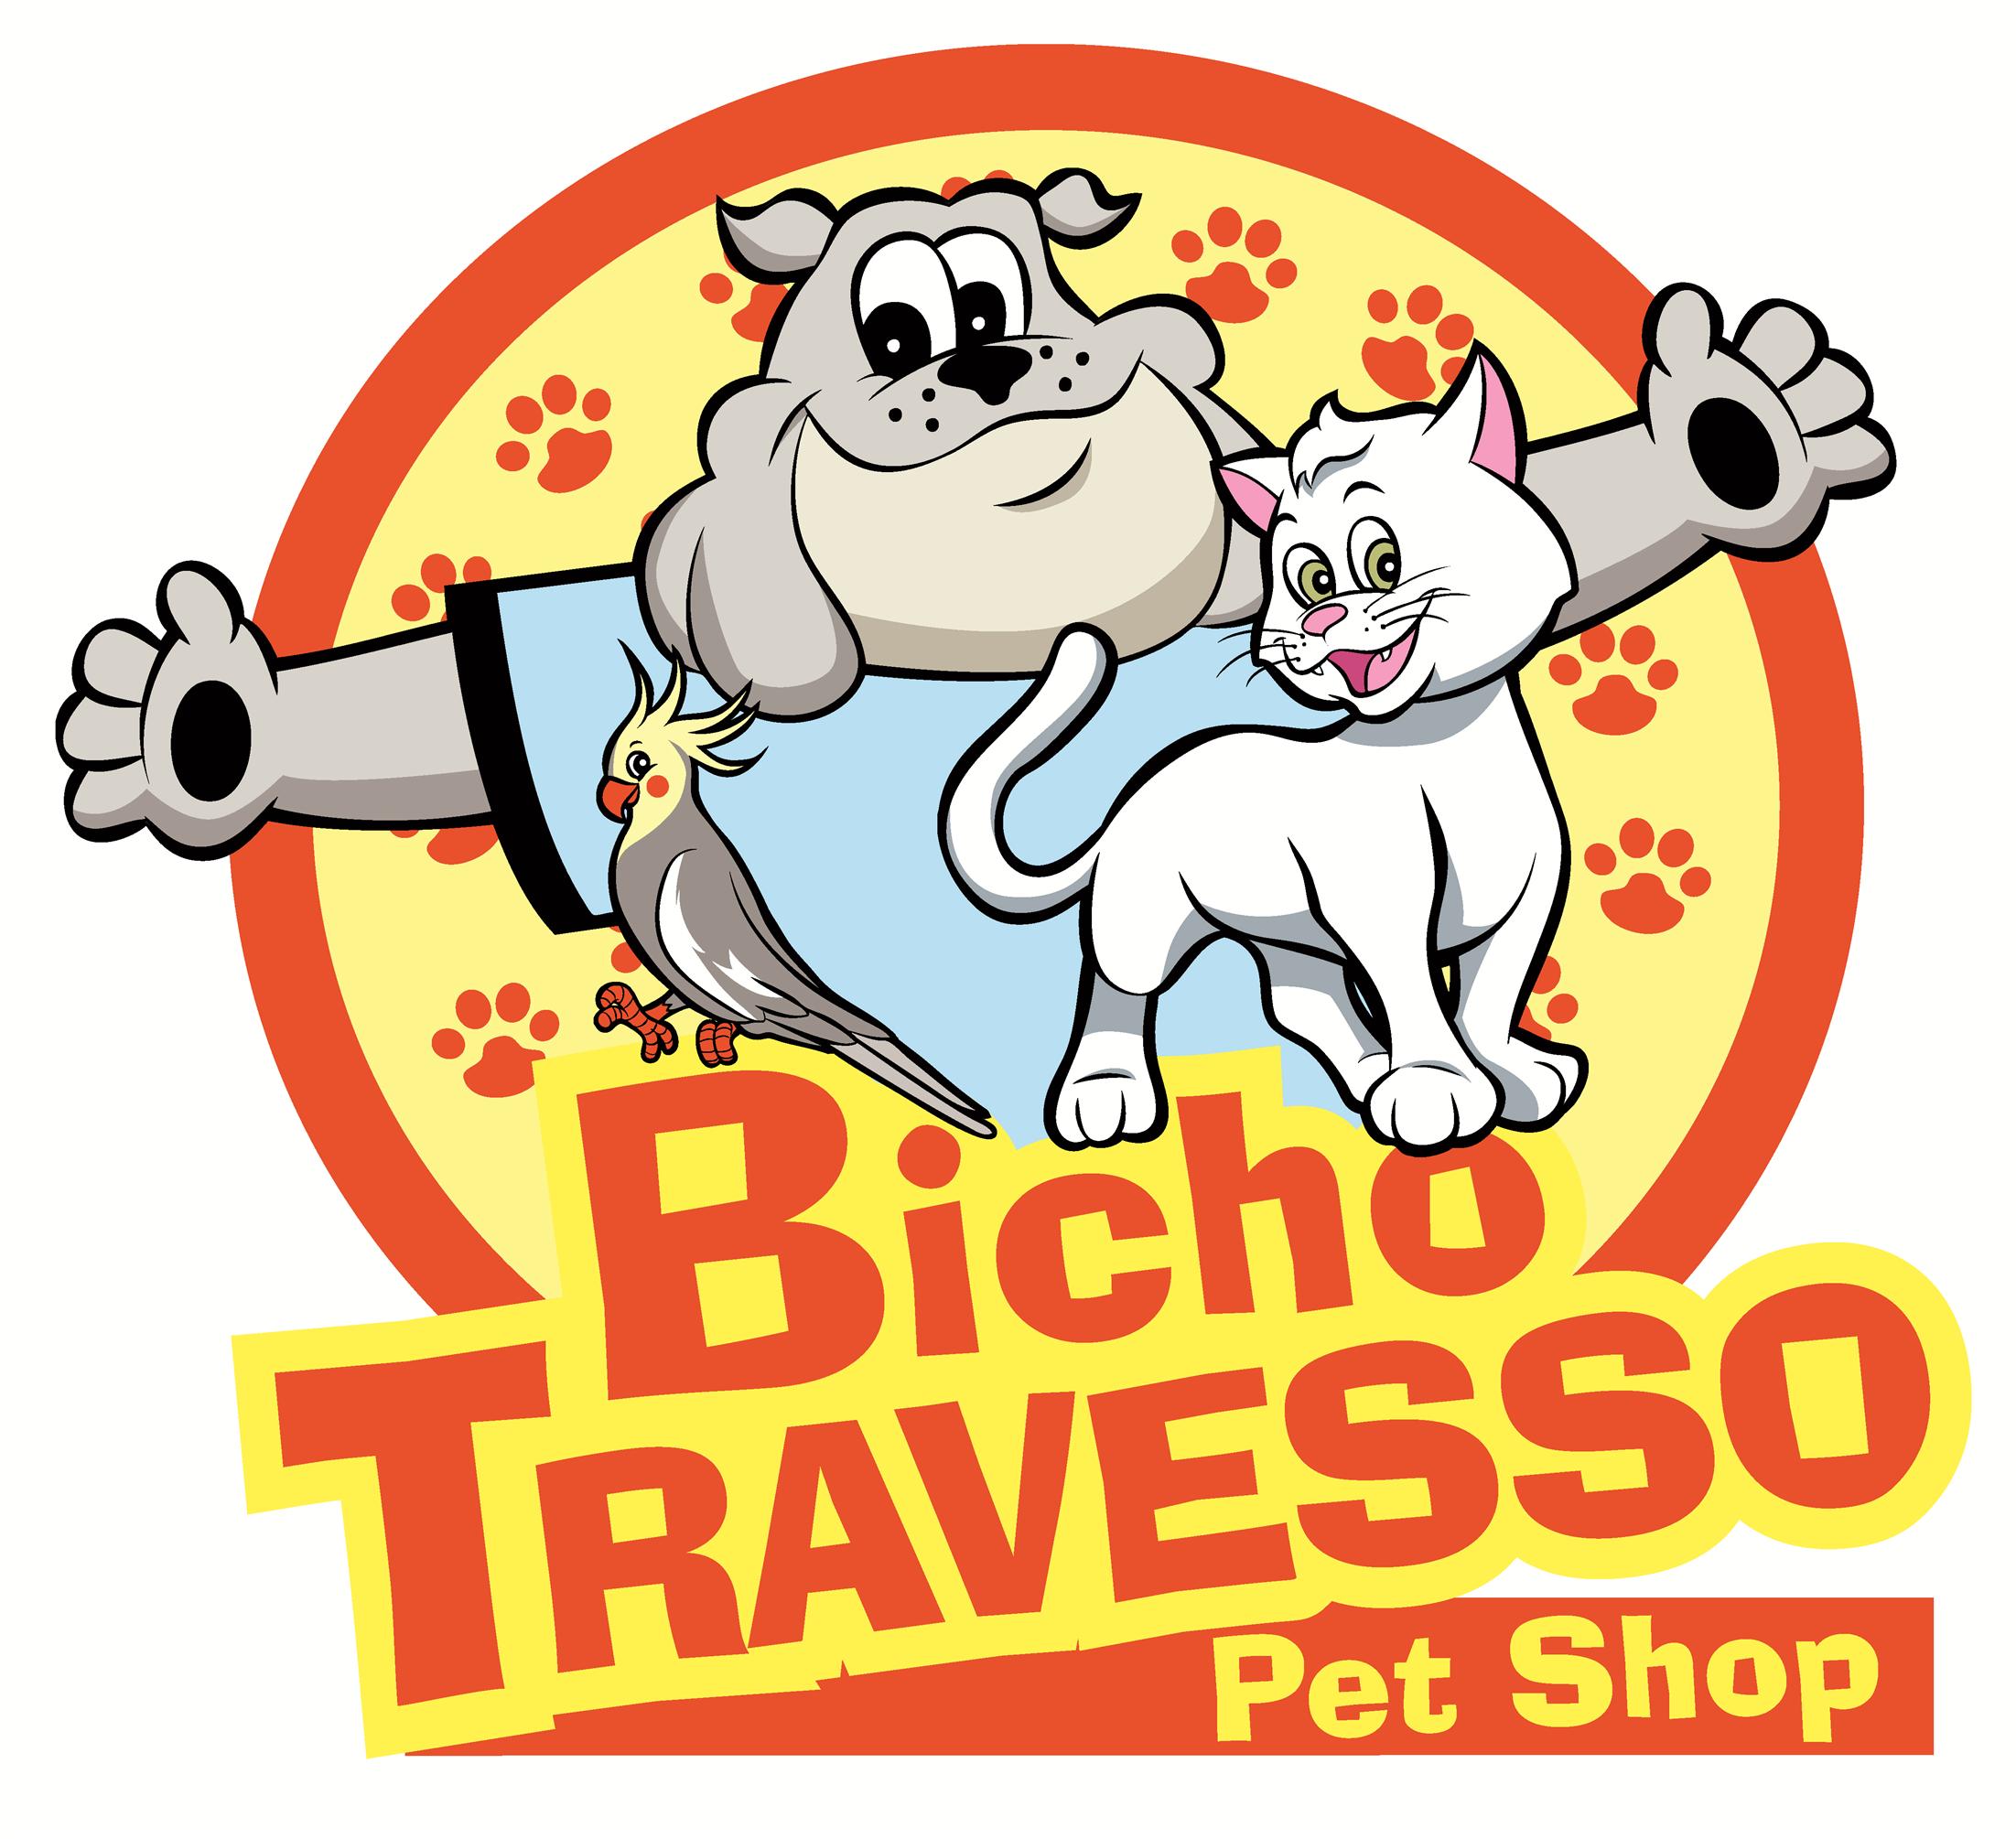 PET SHOP BICHO TRAVESSO